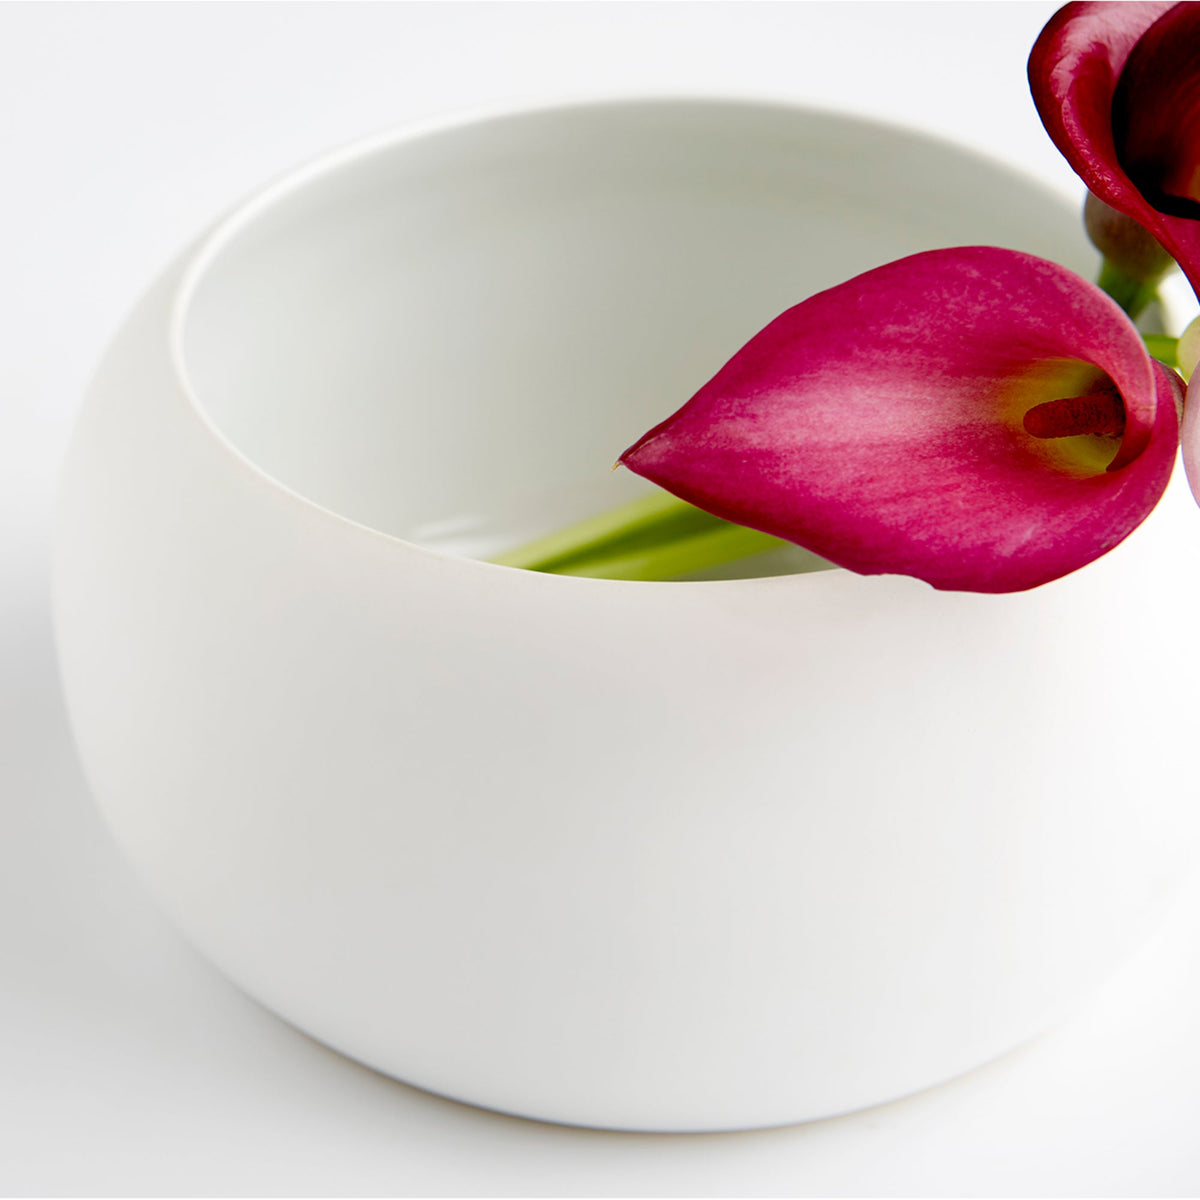 Purezza Bowl|White-Medium by Cyan